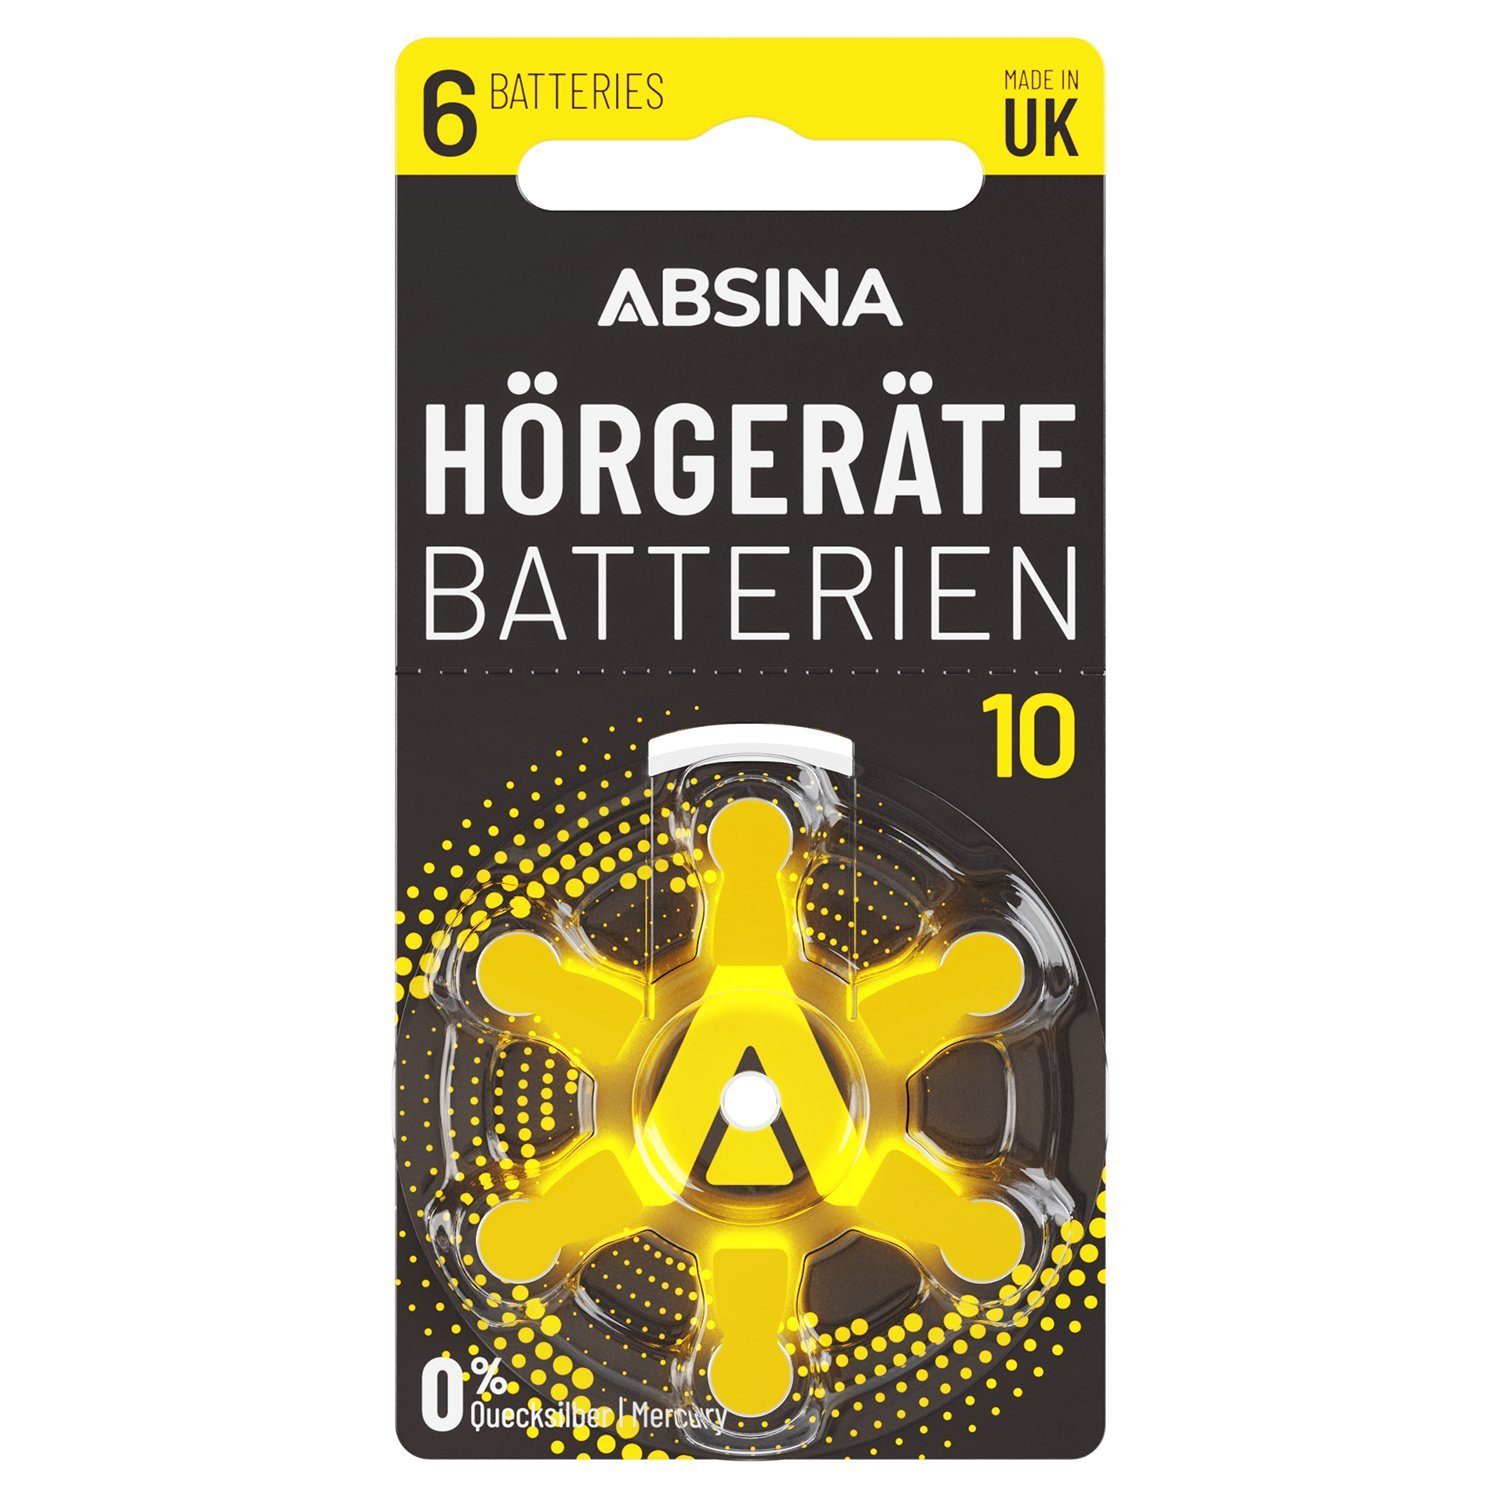 ABSINA 6x Hörgerätebatterien Typ 10 - Hörgeräte Batterien gelb Typ PR70 ZL4 Knopfzelle, (1 St) | Knopfzellen